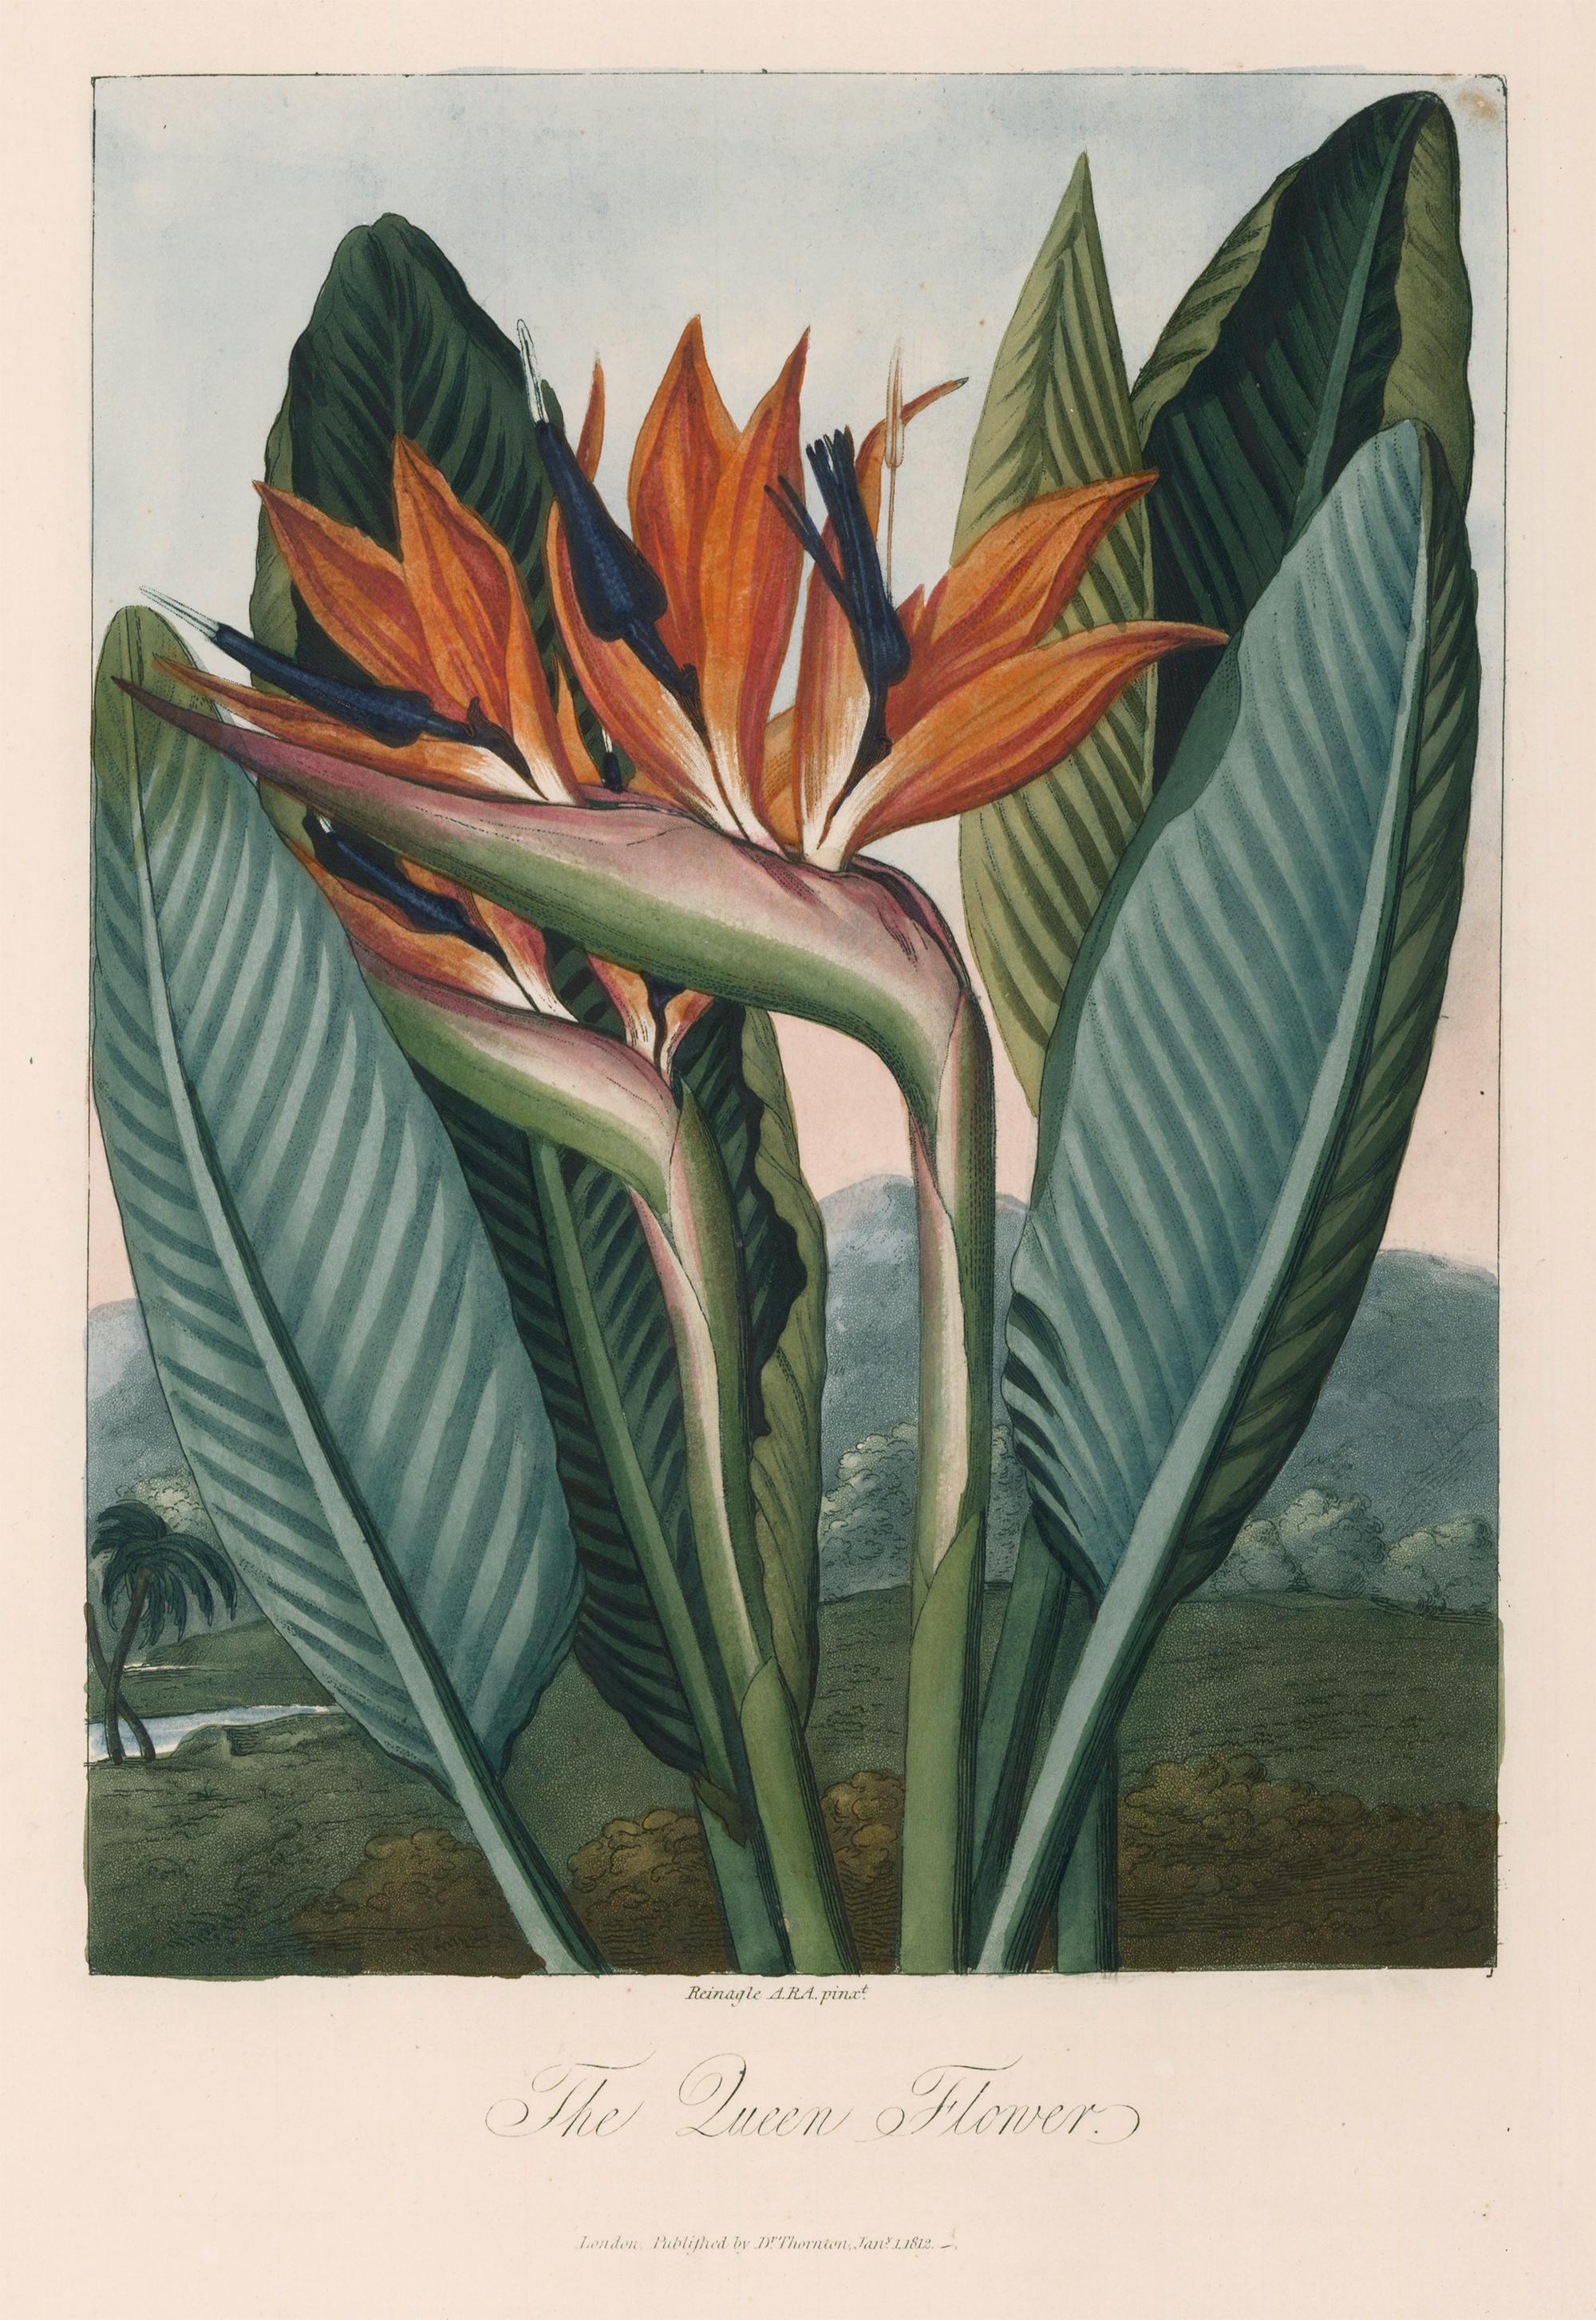 Dr. Robert John Thornton Landscape Print - The Queen Flower from  Temple of Flora